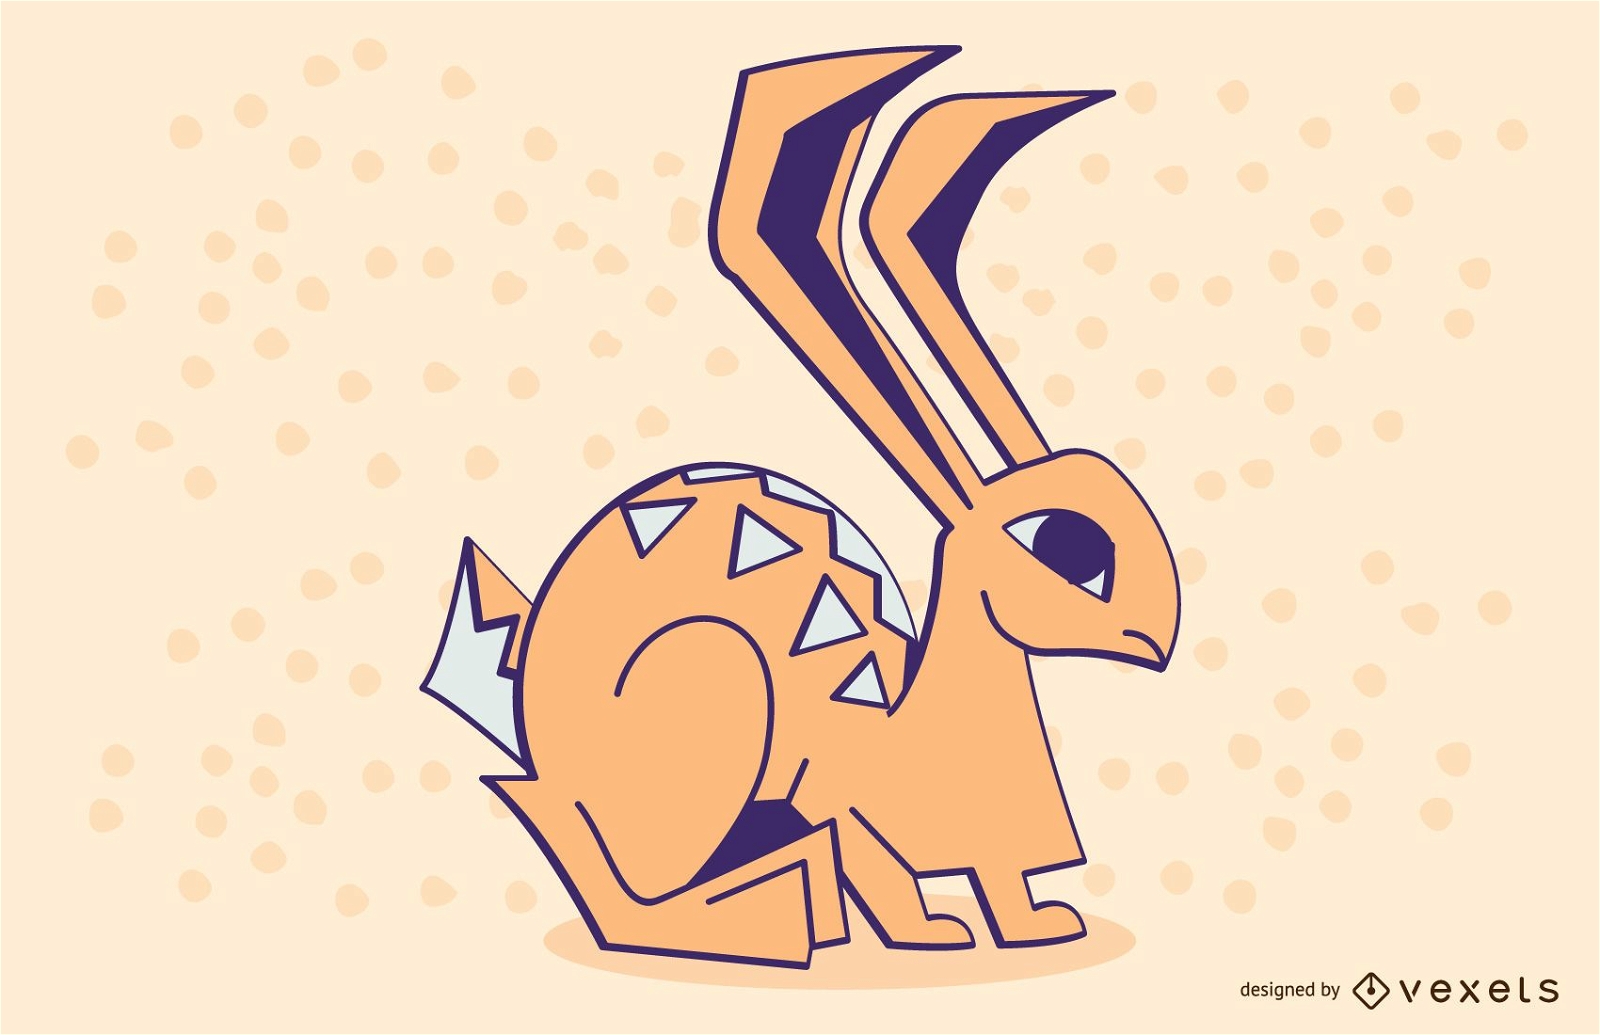 Stilvolles farbiges Kaninchen-Illustrationsdesign